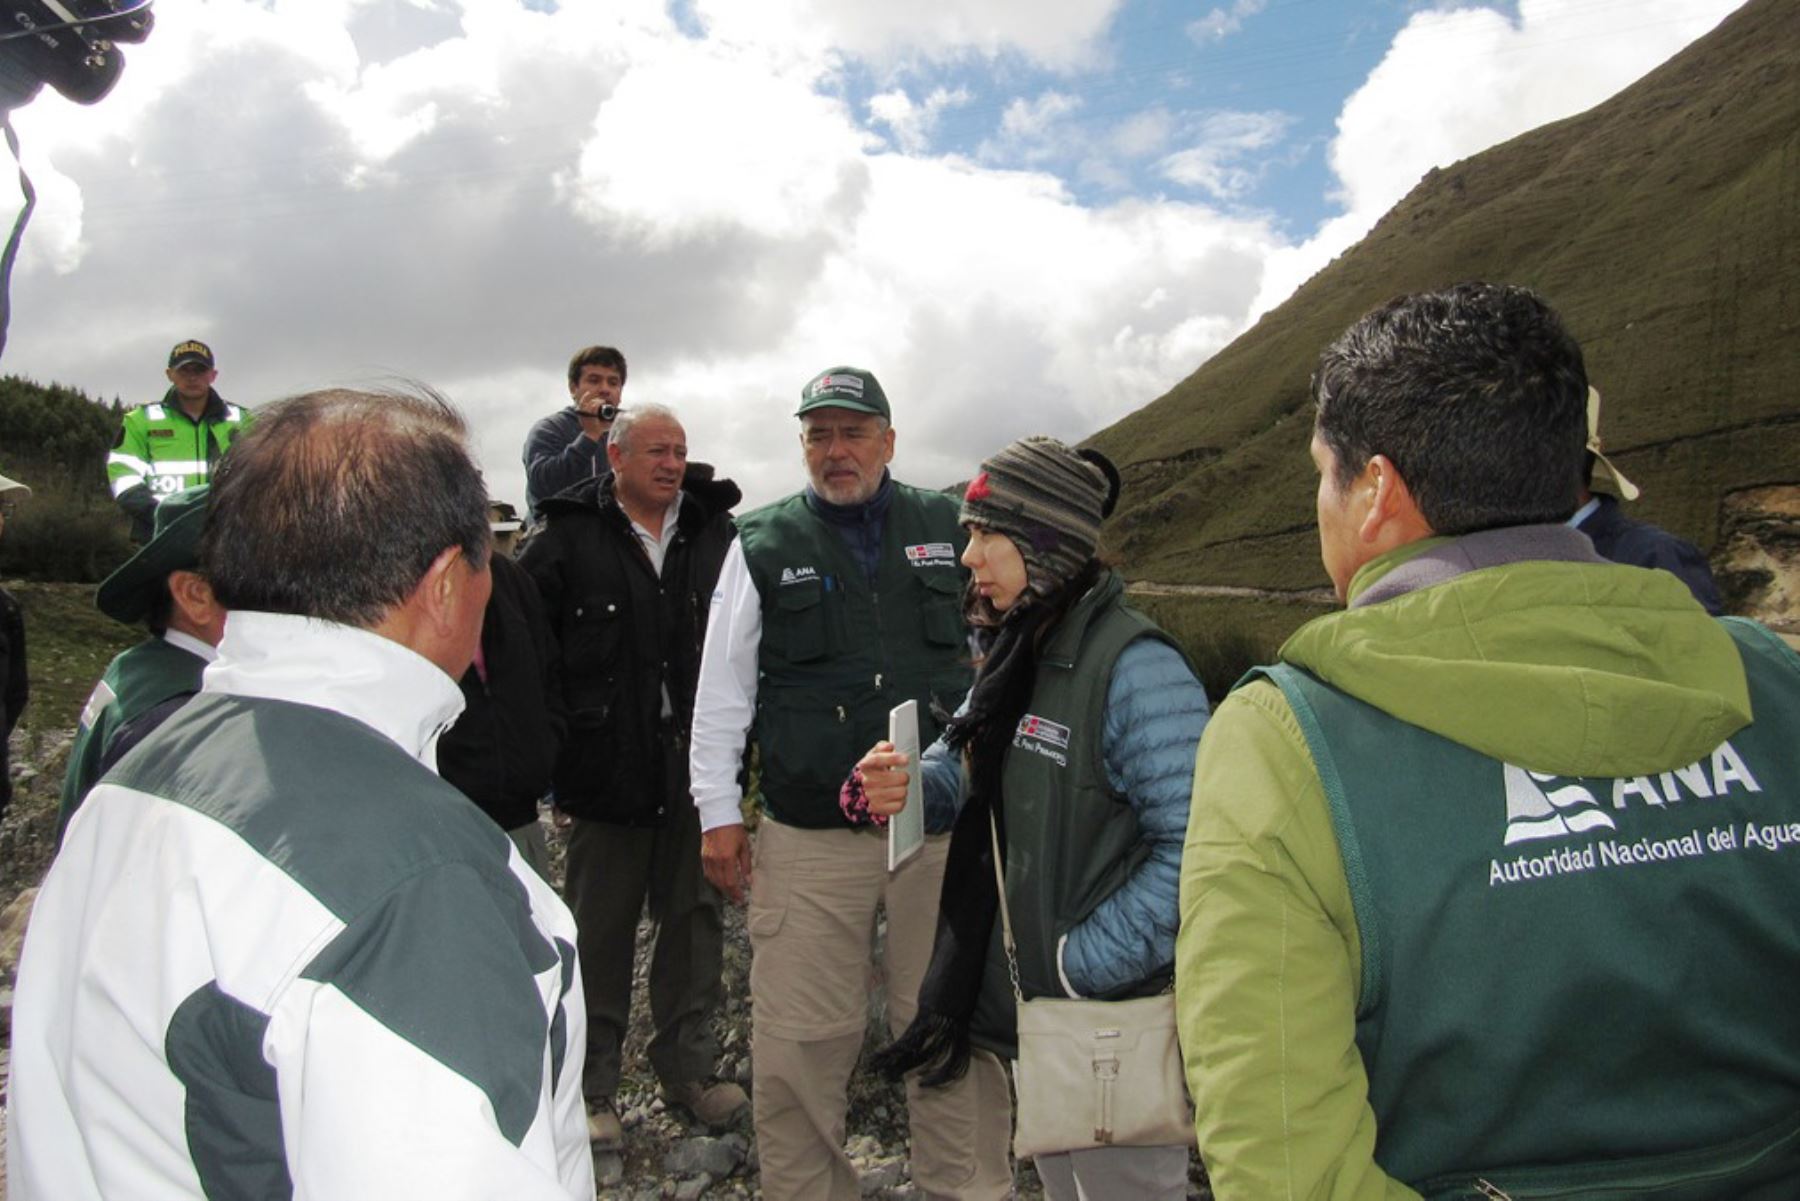 Equipo técnico de la Autoridad Nacional del Agua recorrió la zona afectada por el relave de la empresa minera Gold Fields, en la provincia cajamarquina de Hualgayoc.